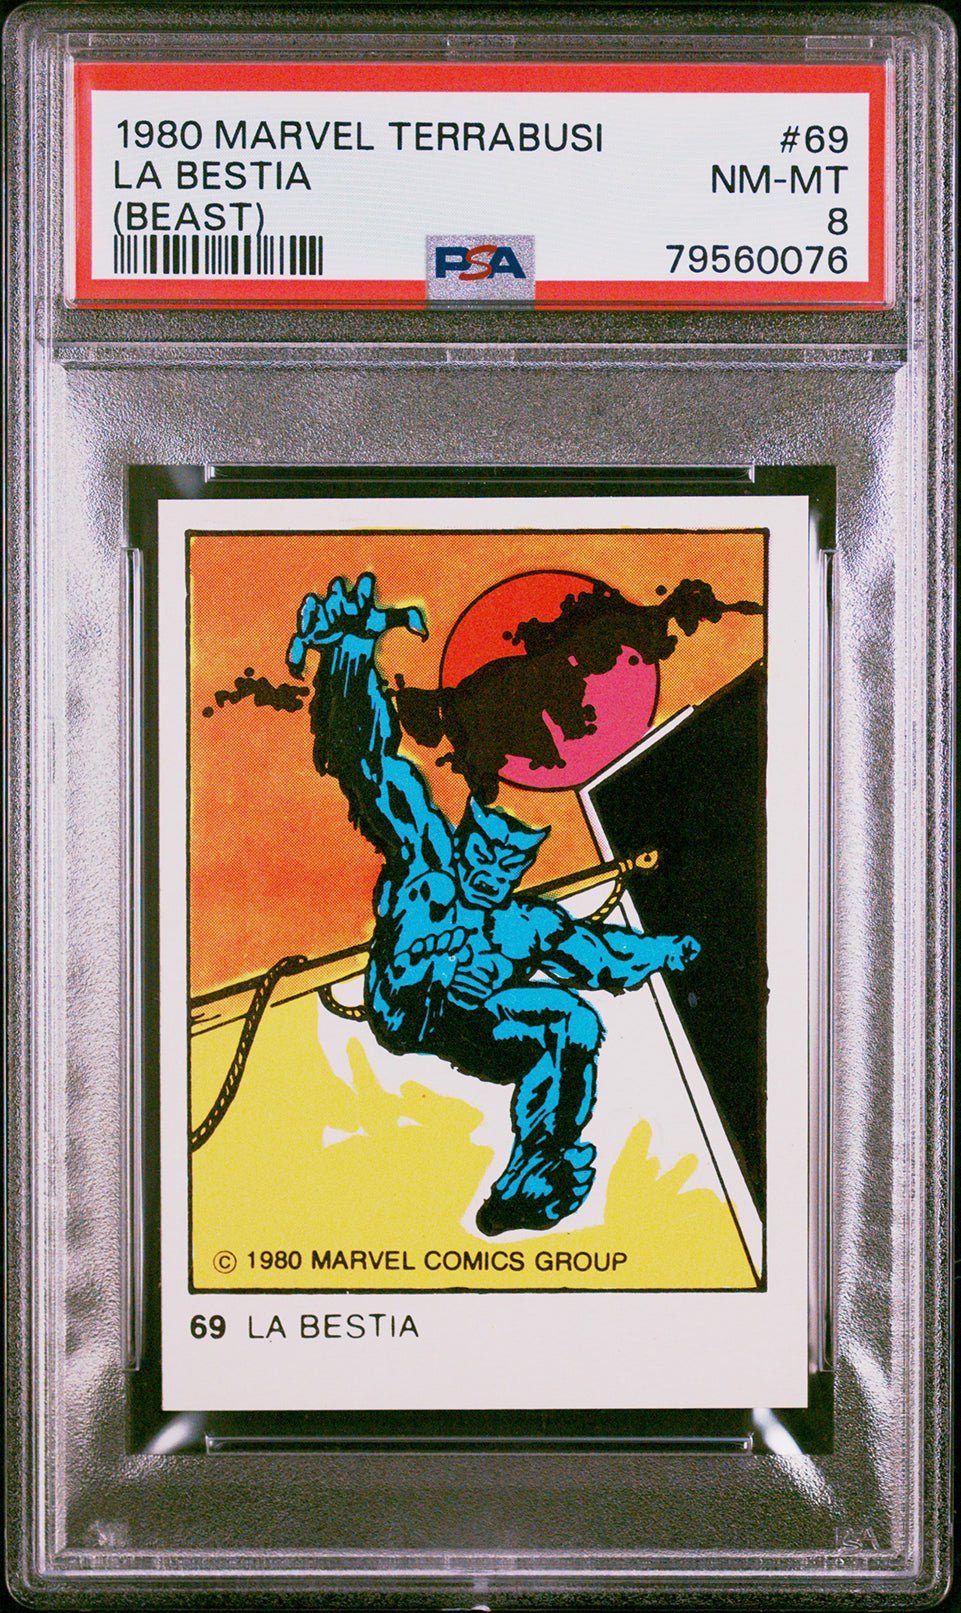 BEAST PSA 8 1980 Marvel Terrabusi La Bestia #69 Marvel Base Graded Cards - Hobby Gems